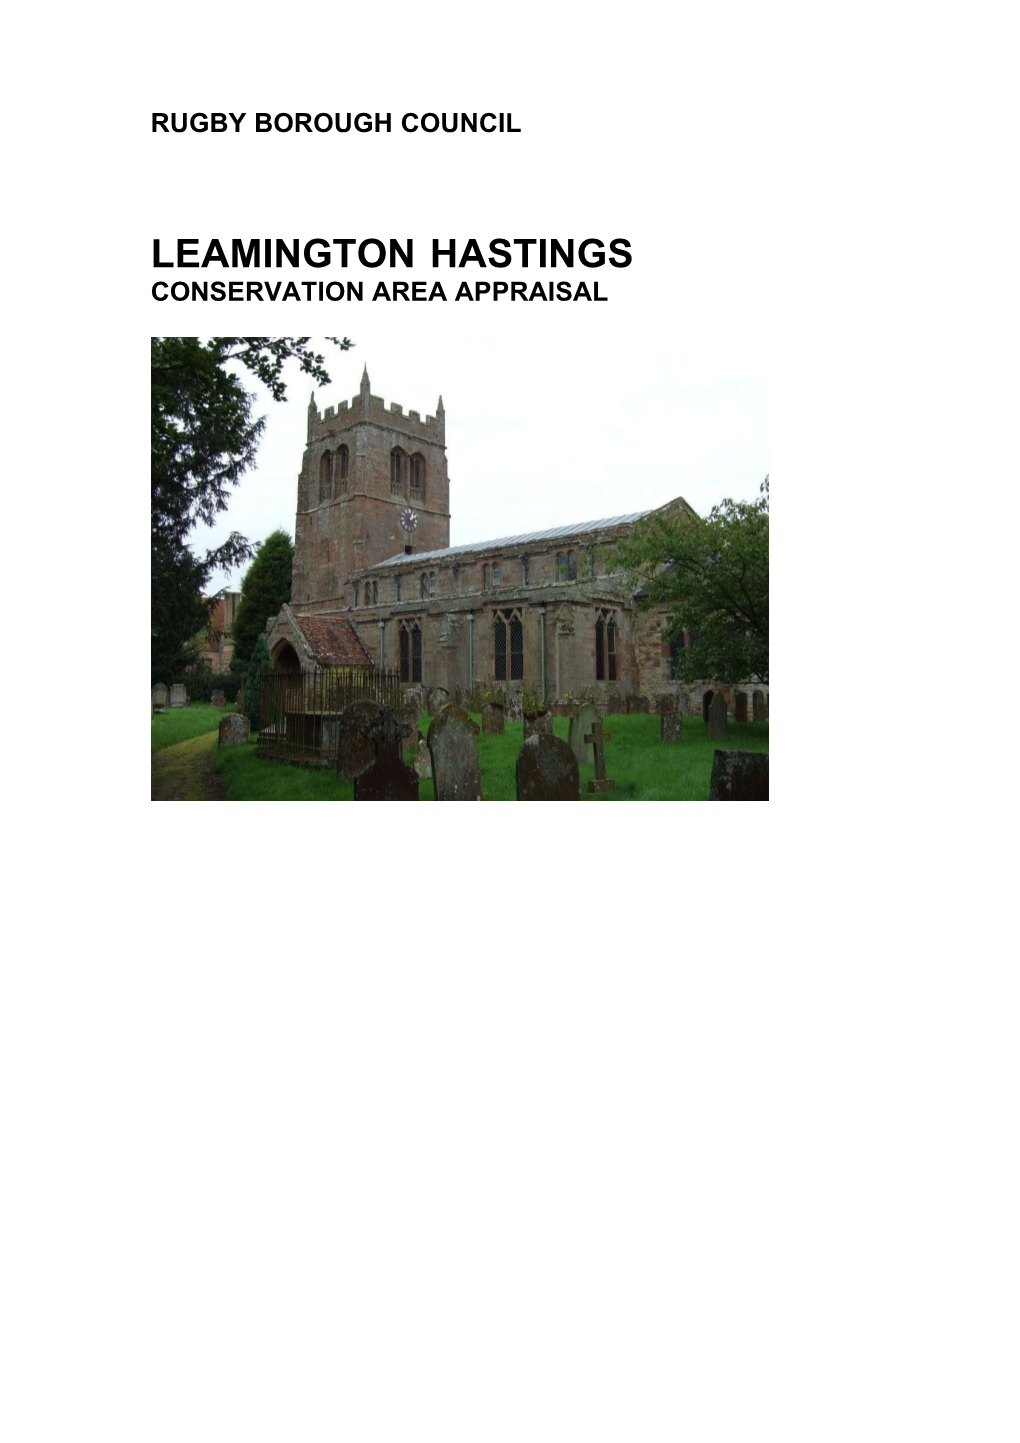 Leamington Hastings Conservation Area Appraisal